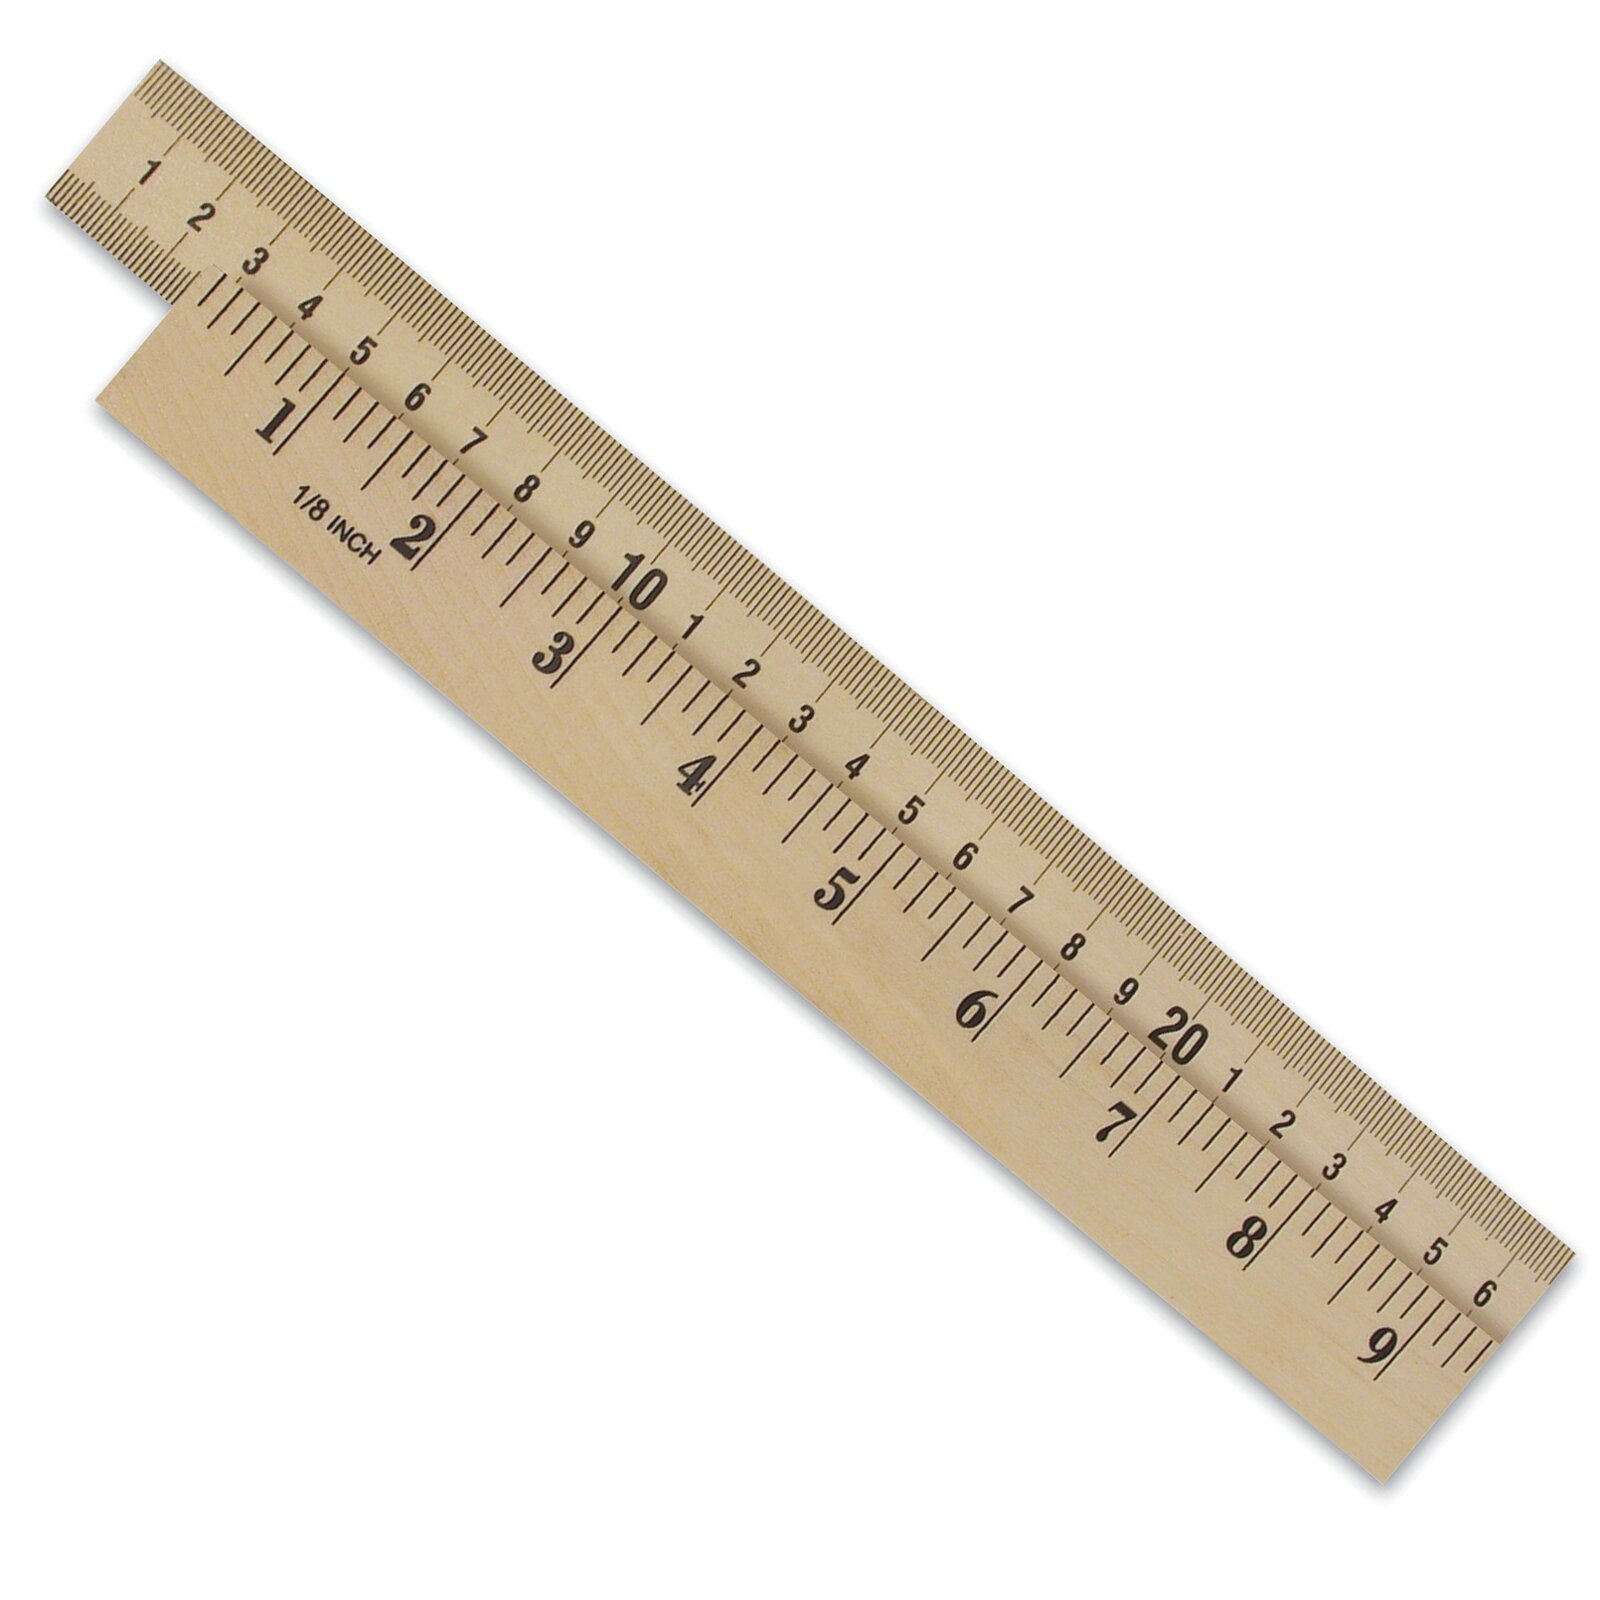 Wooden Meter Stick Ruler